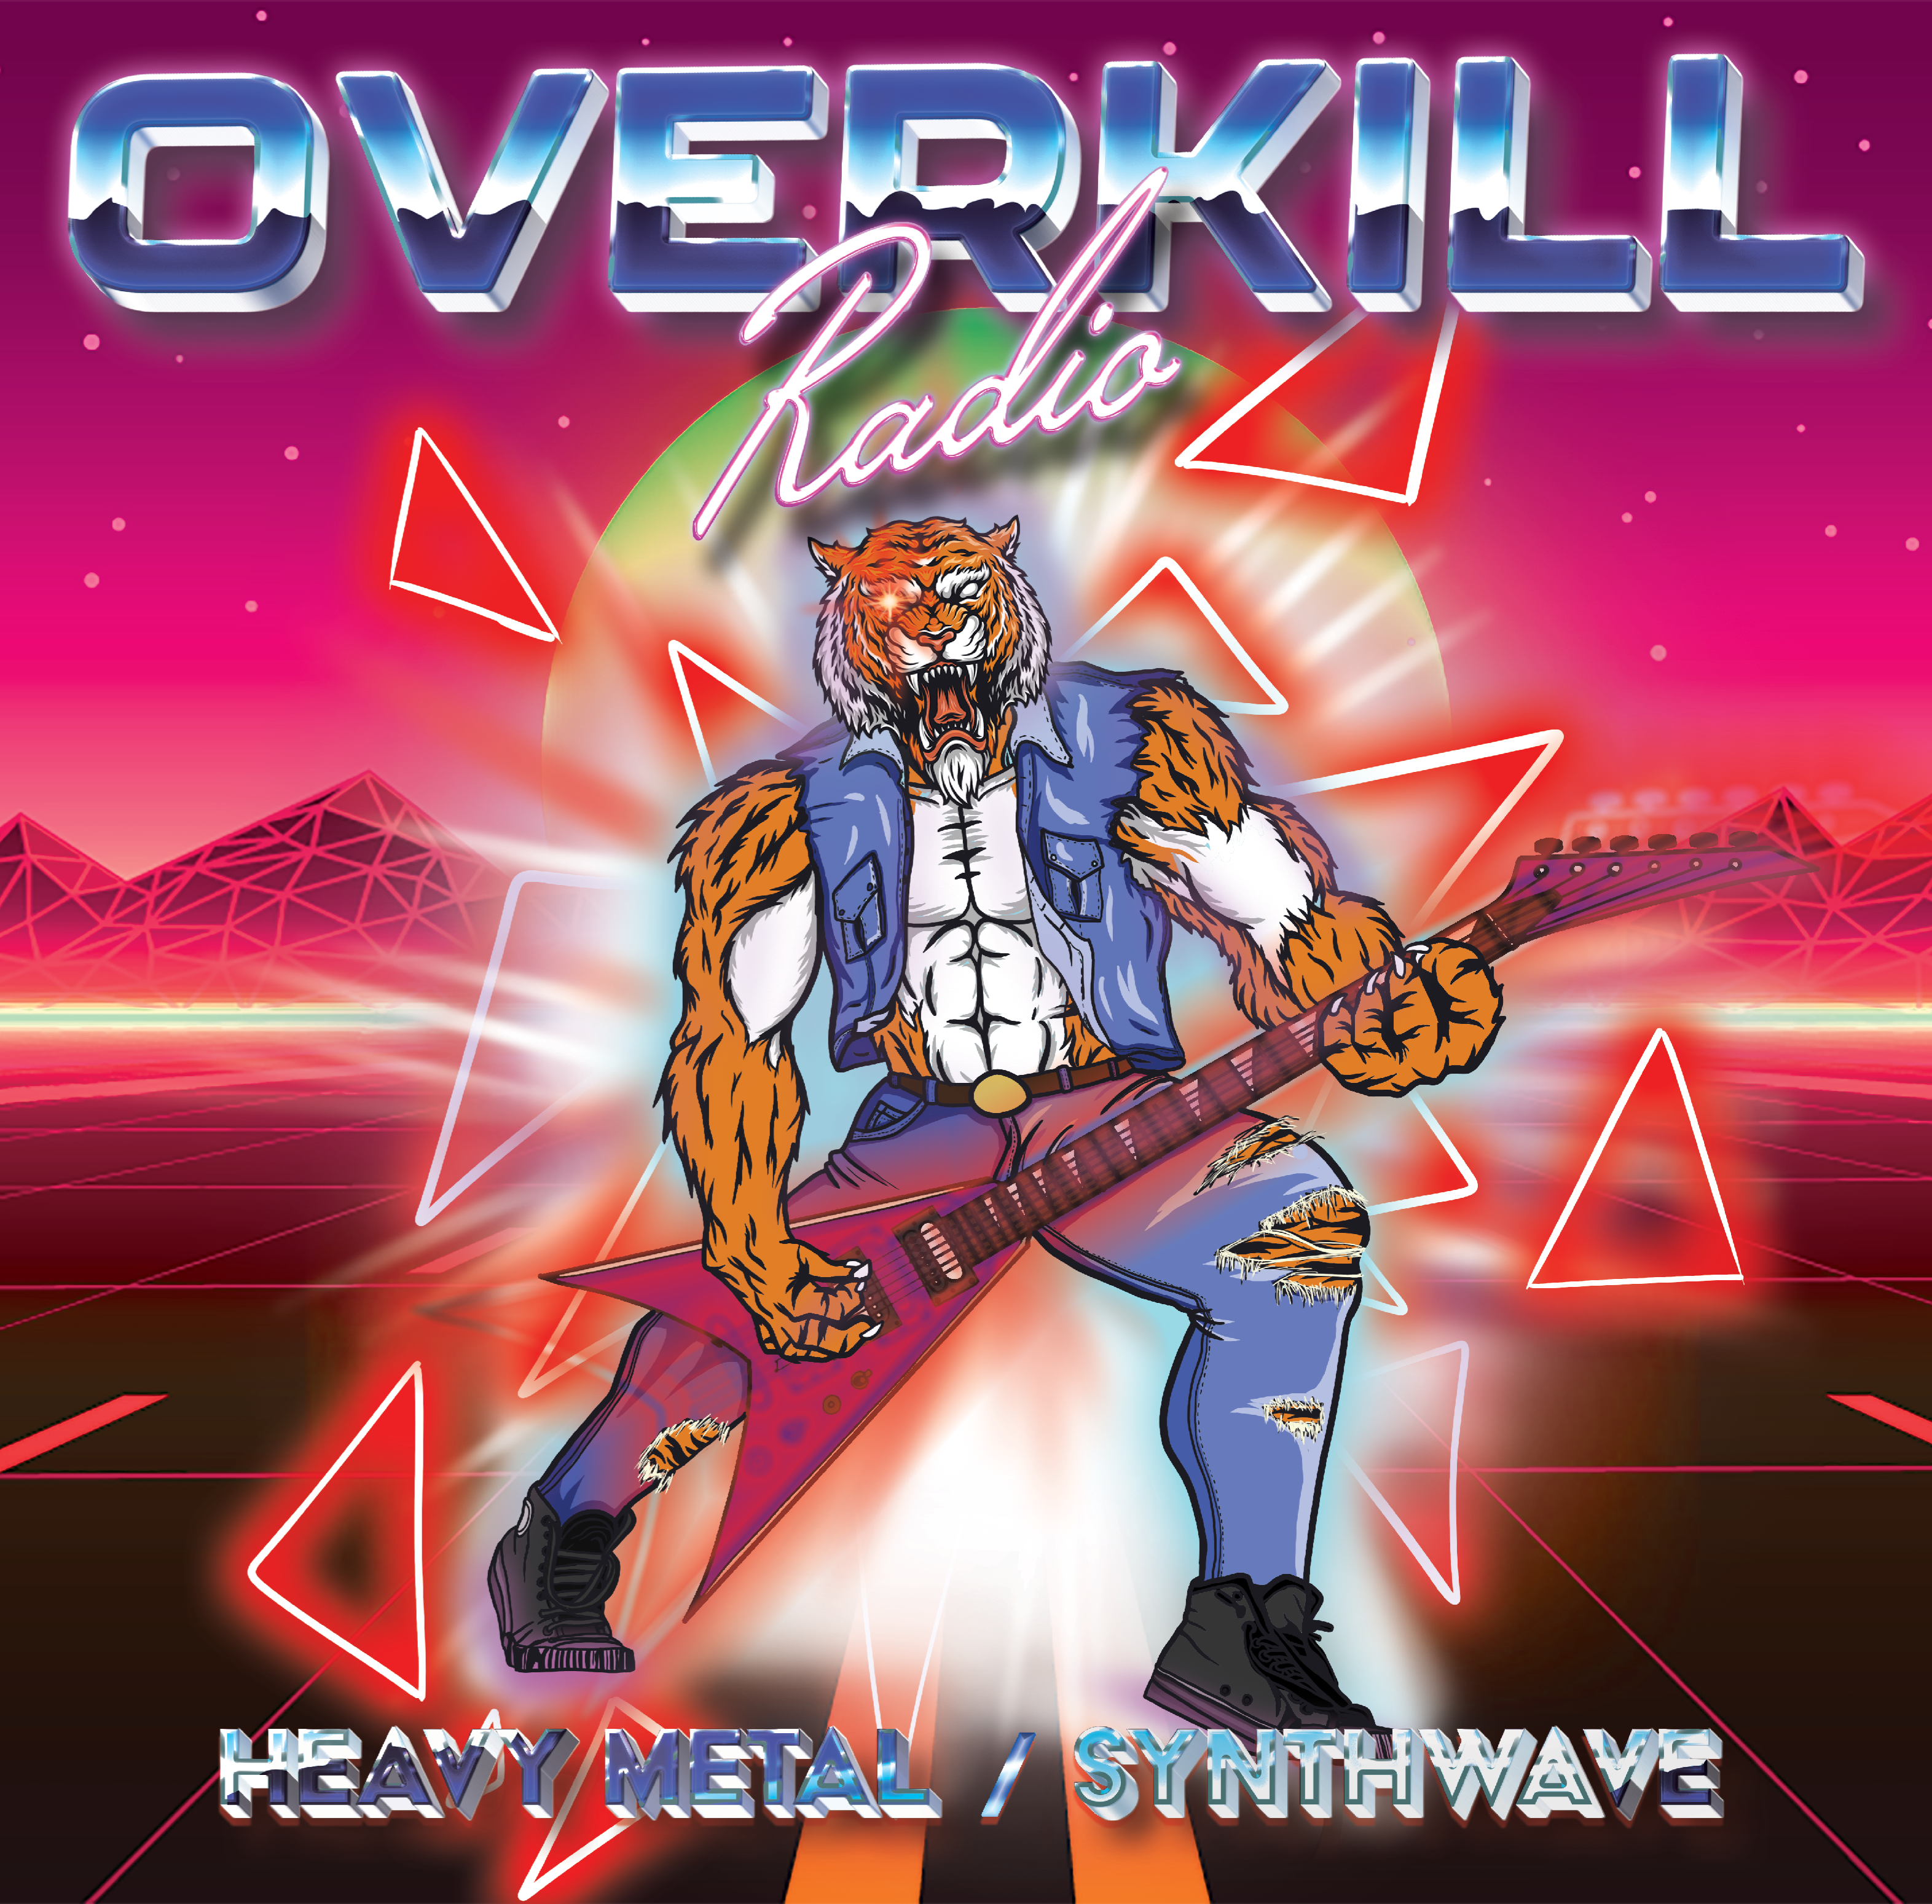 Art for Overkill Radio ID 2 by OVERKILL RADIO